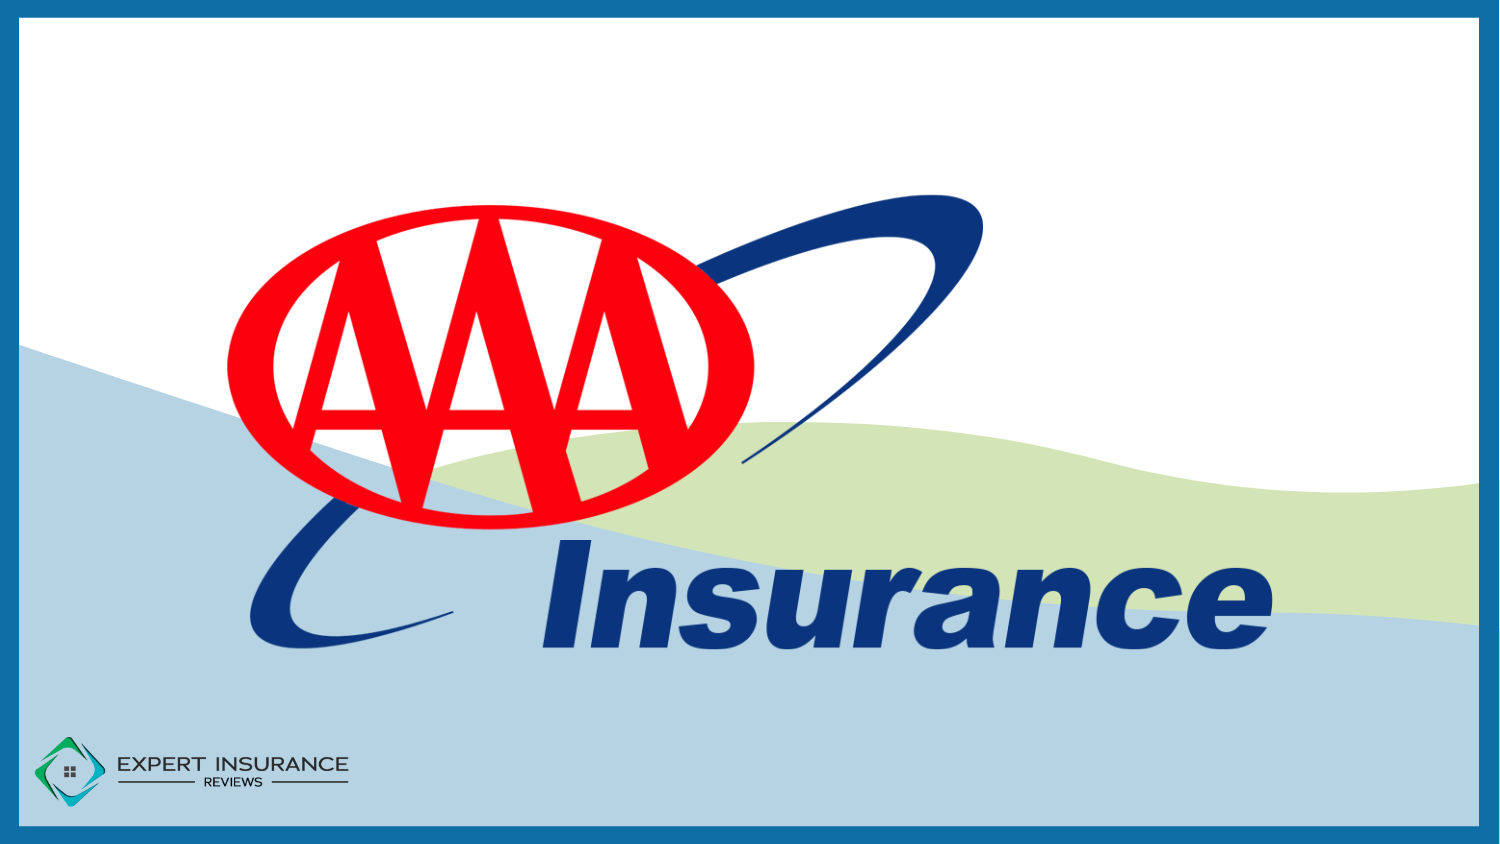 Best Insurance Companies: AAA